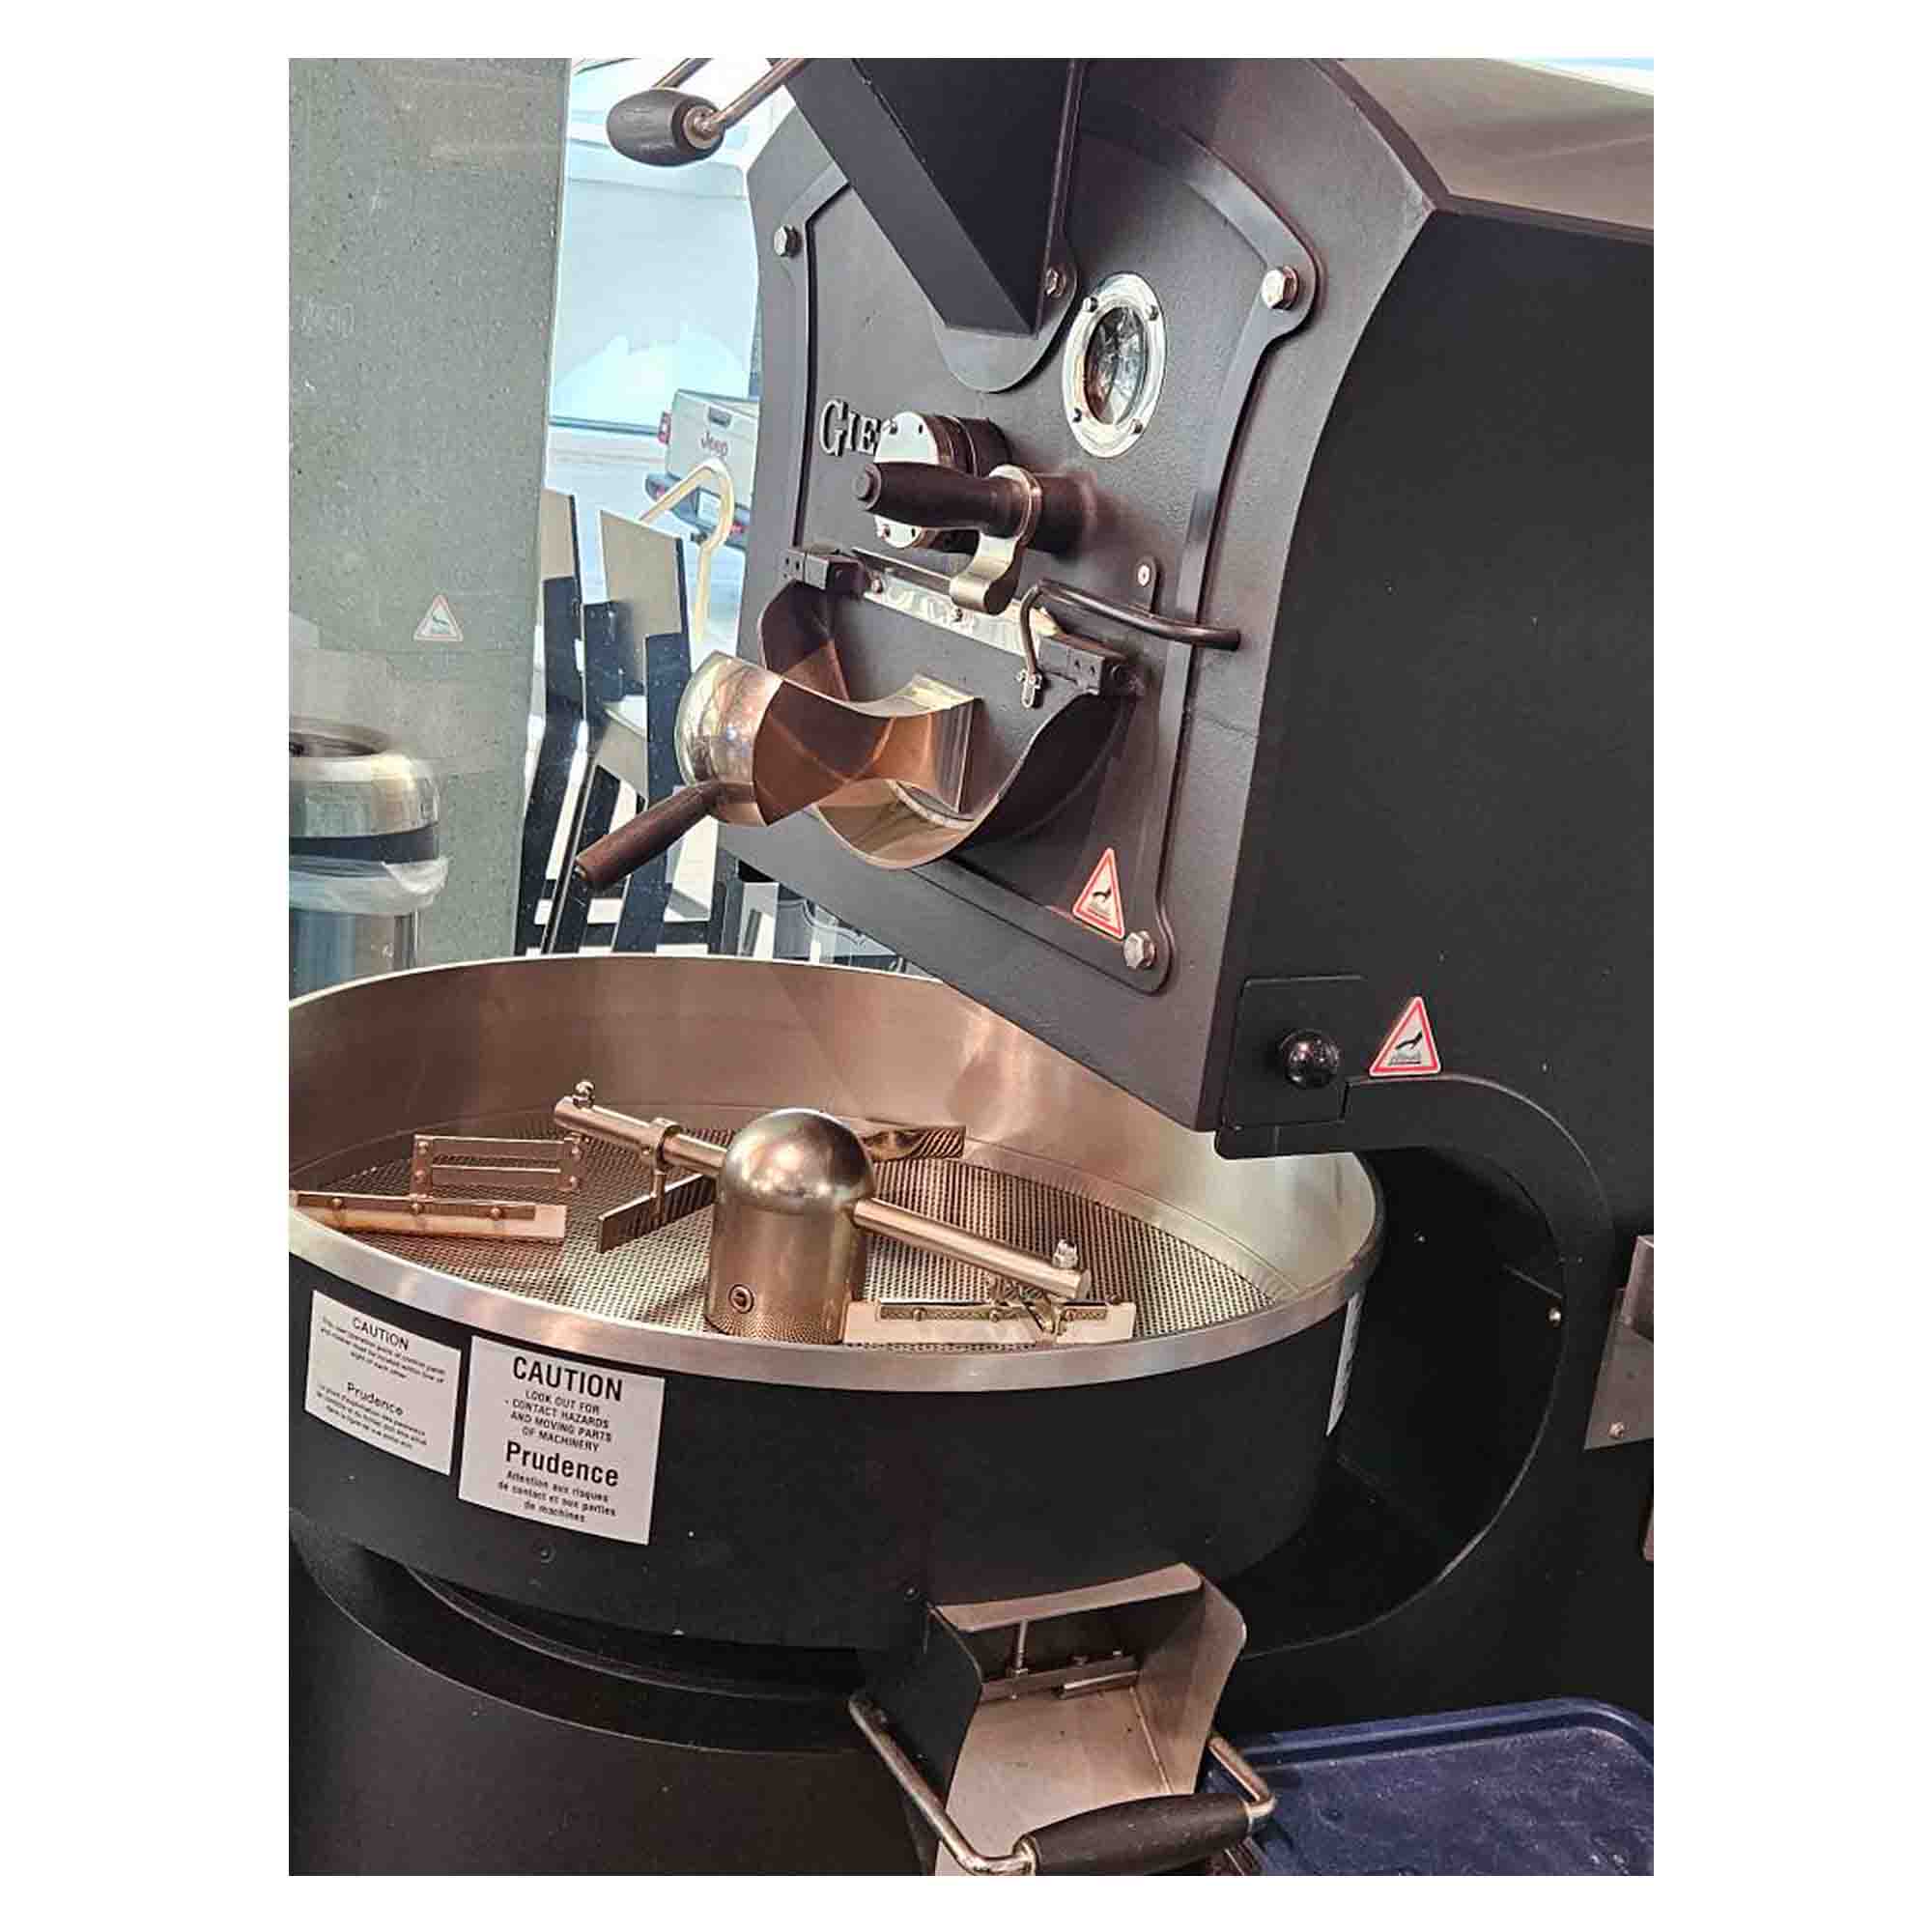 6kg Used Coffee Roaster - Giesen W6E Electric Coffee Roaster - 2020